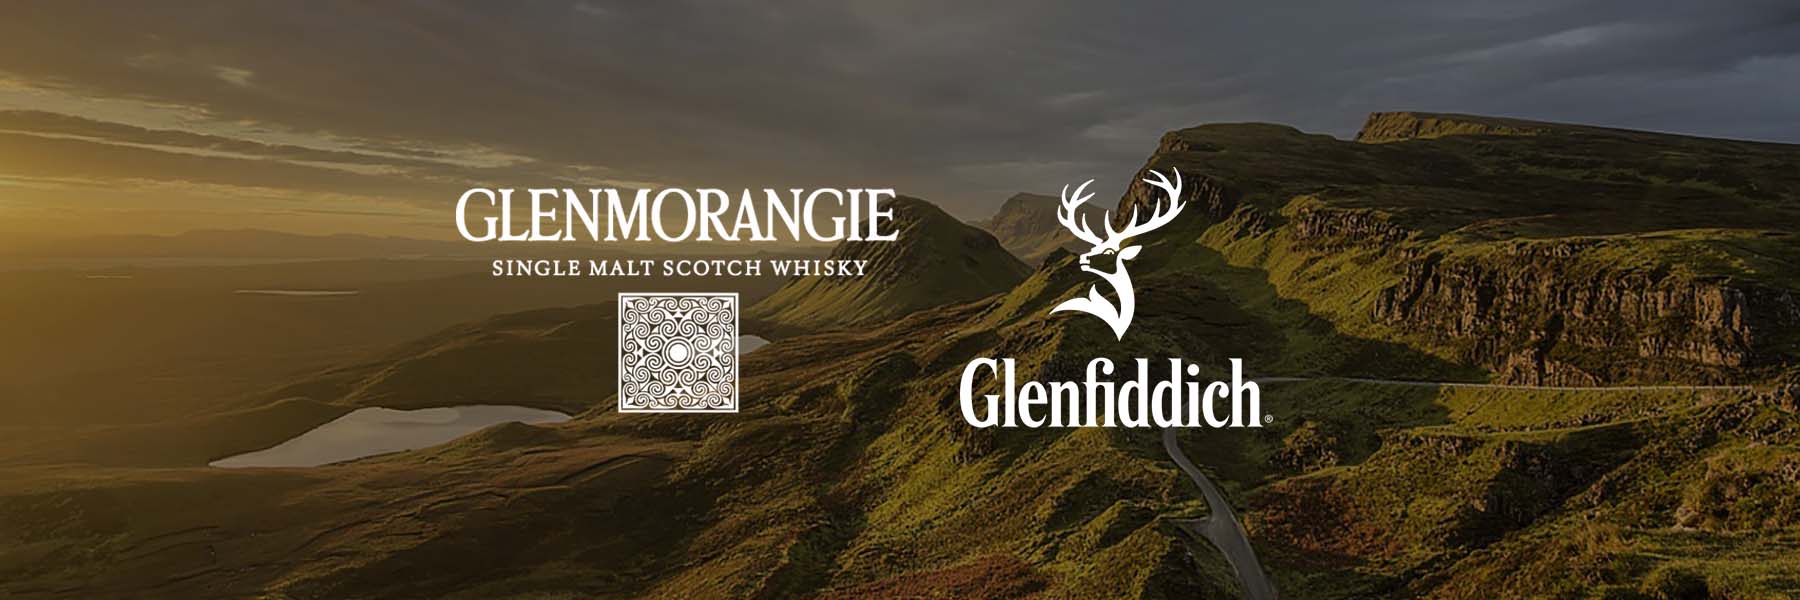 Glenmorangie vs Glenfiddich